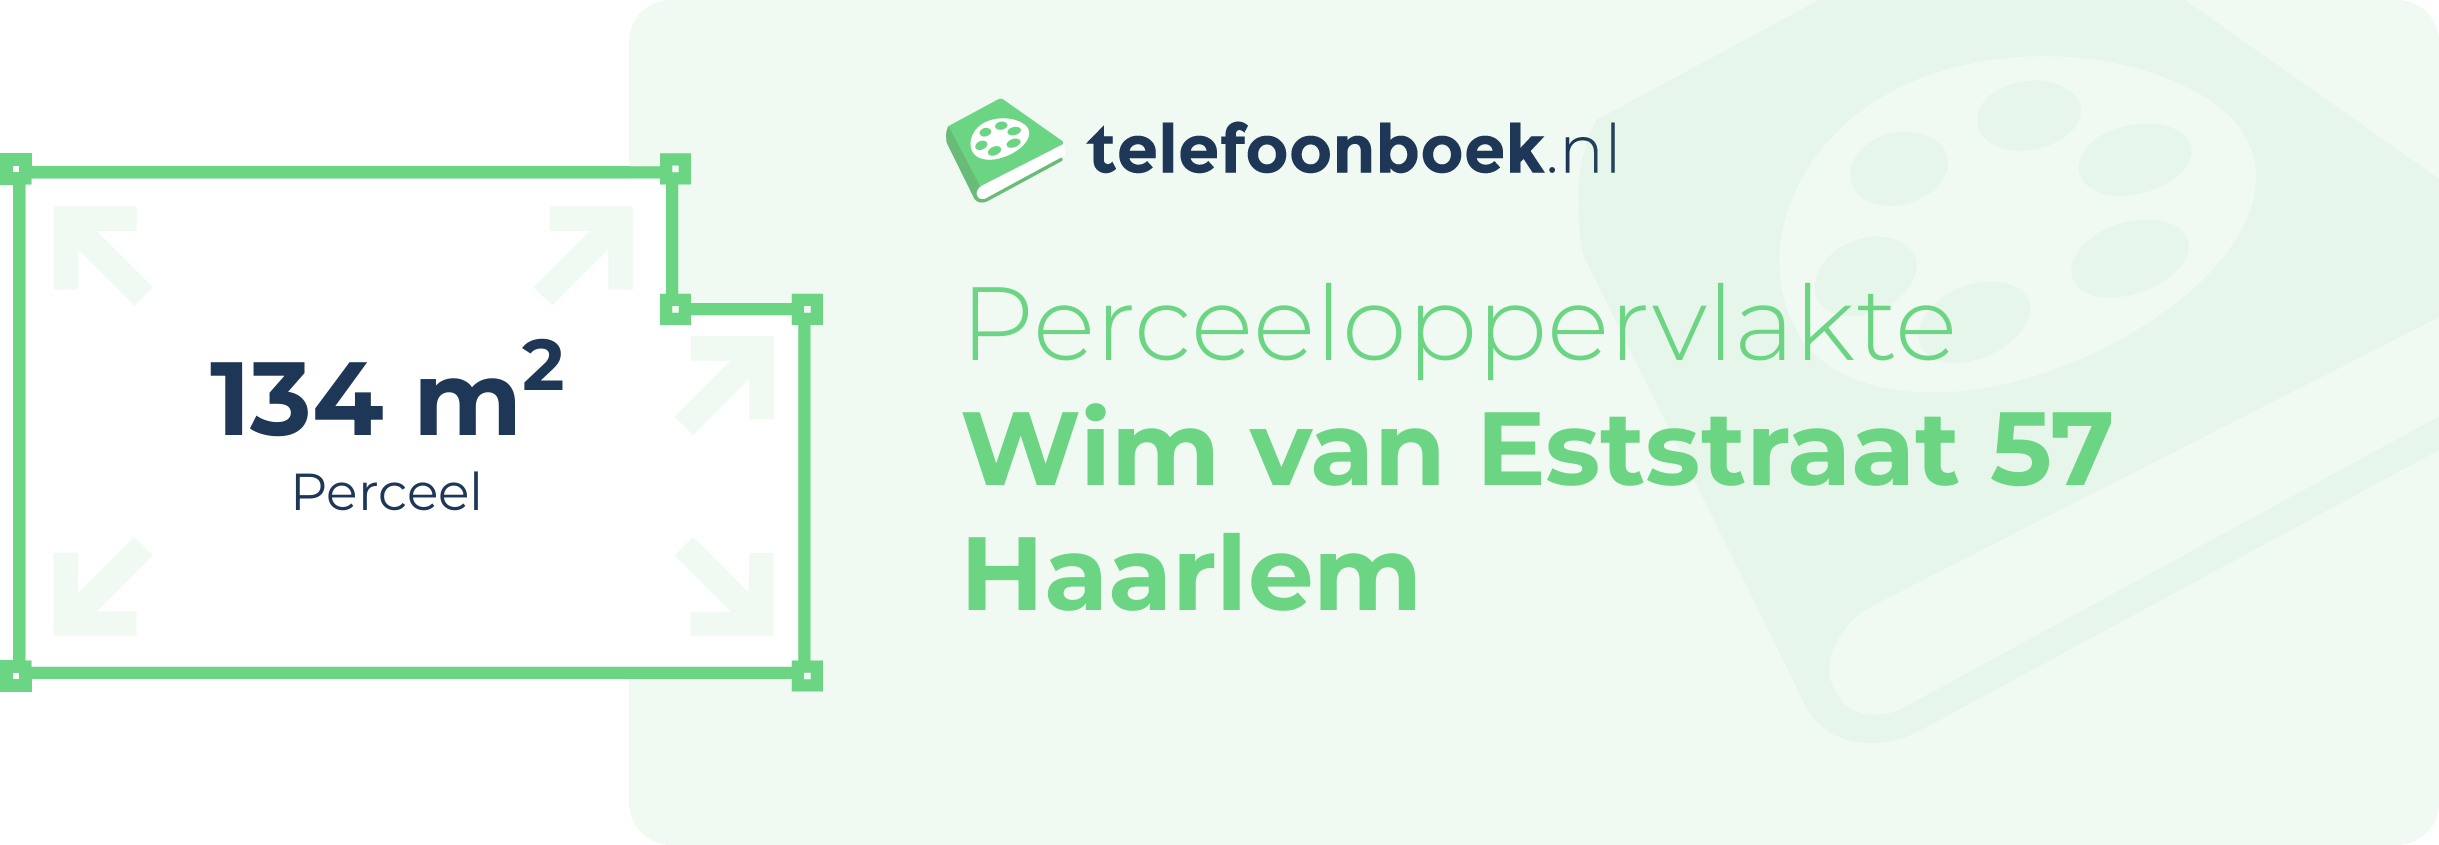 Perceeloppervlakte Wim Van Eststraat 57 Haarlem